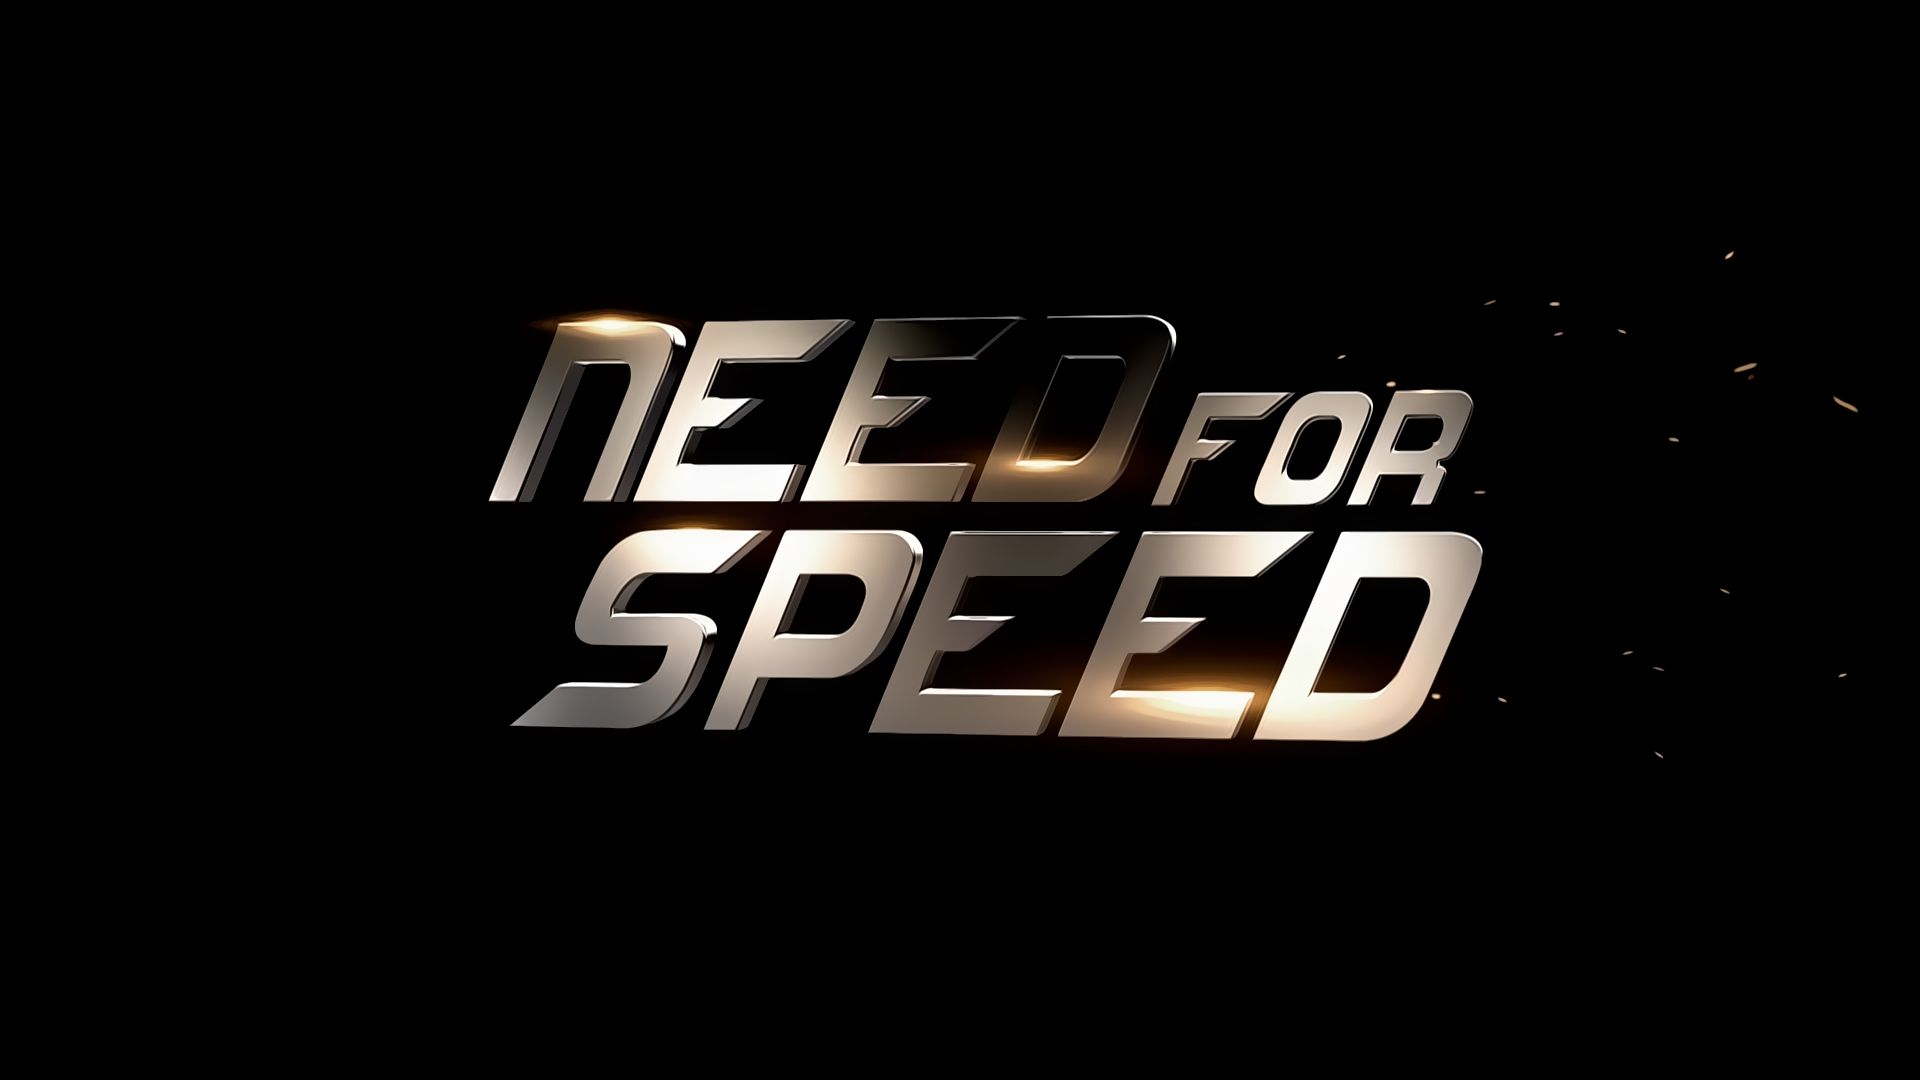 Need For Speed Logo Wallpaper At Wallpaperbro